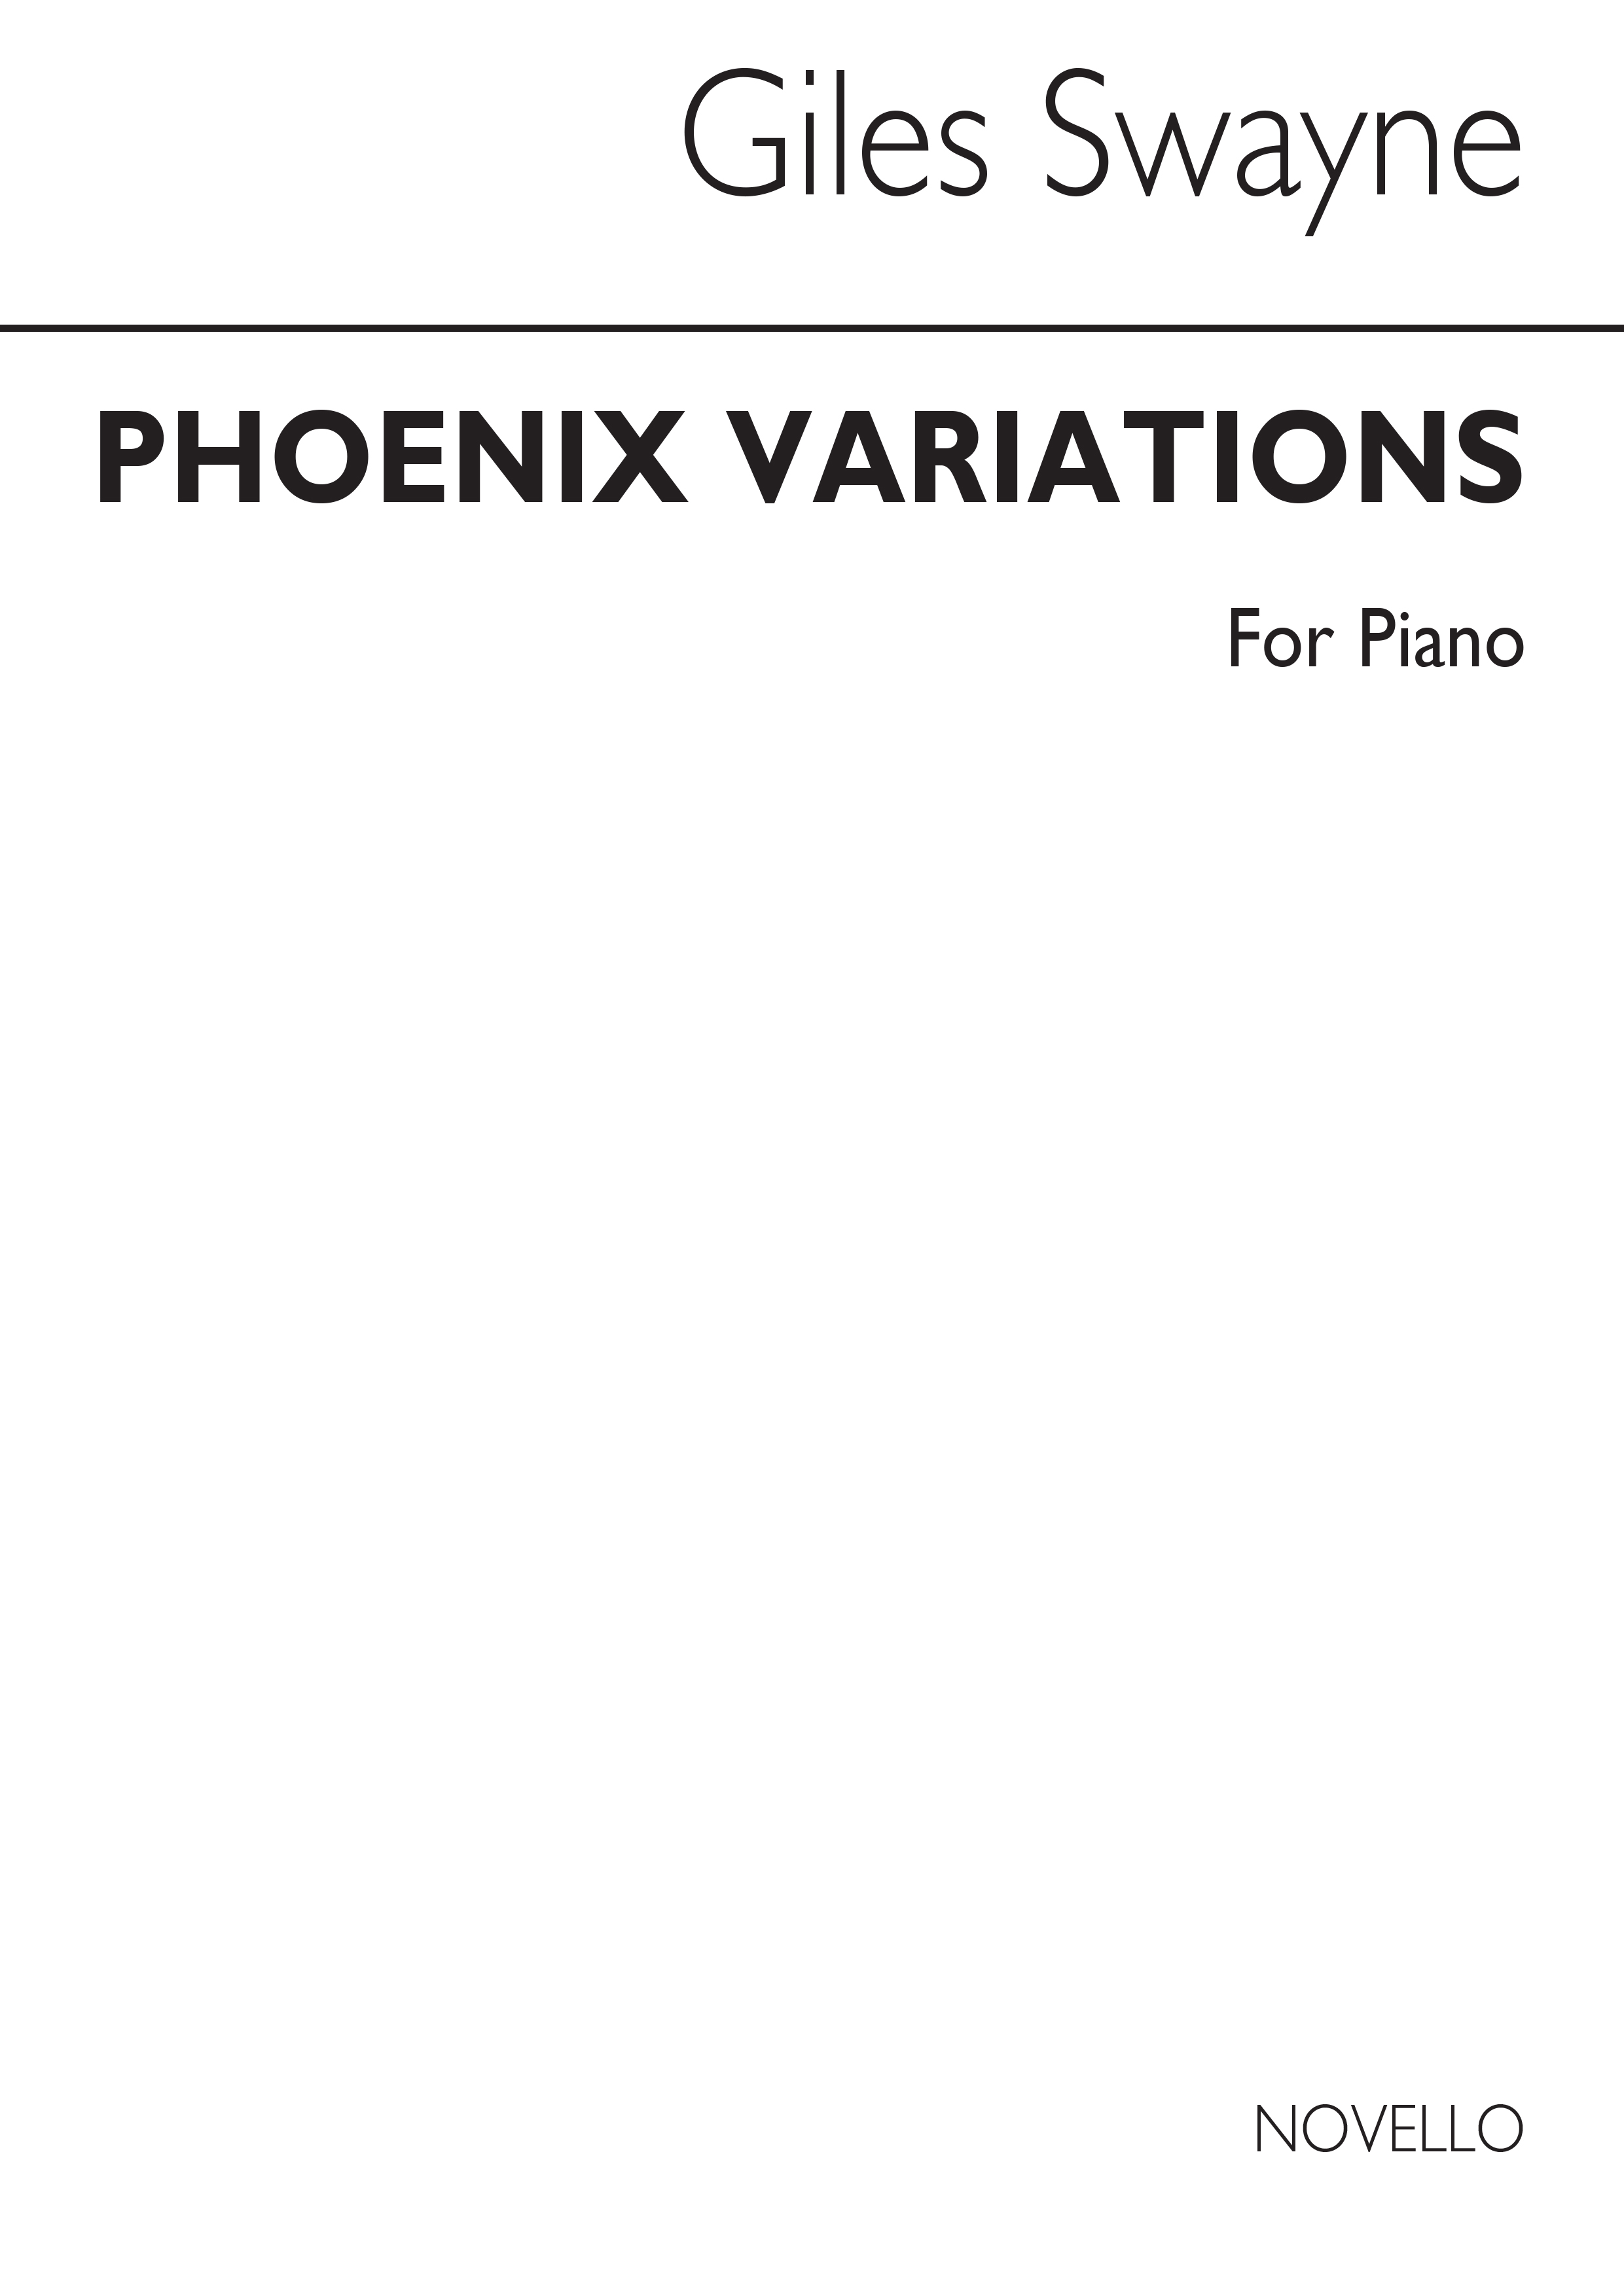 Swayne: Phoenix Variations for Piano